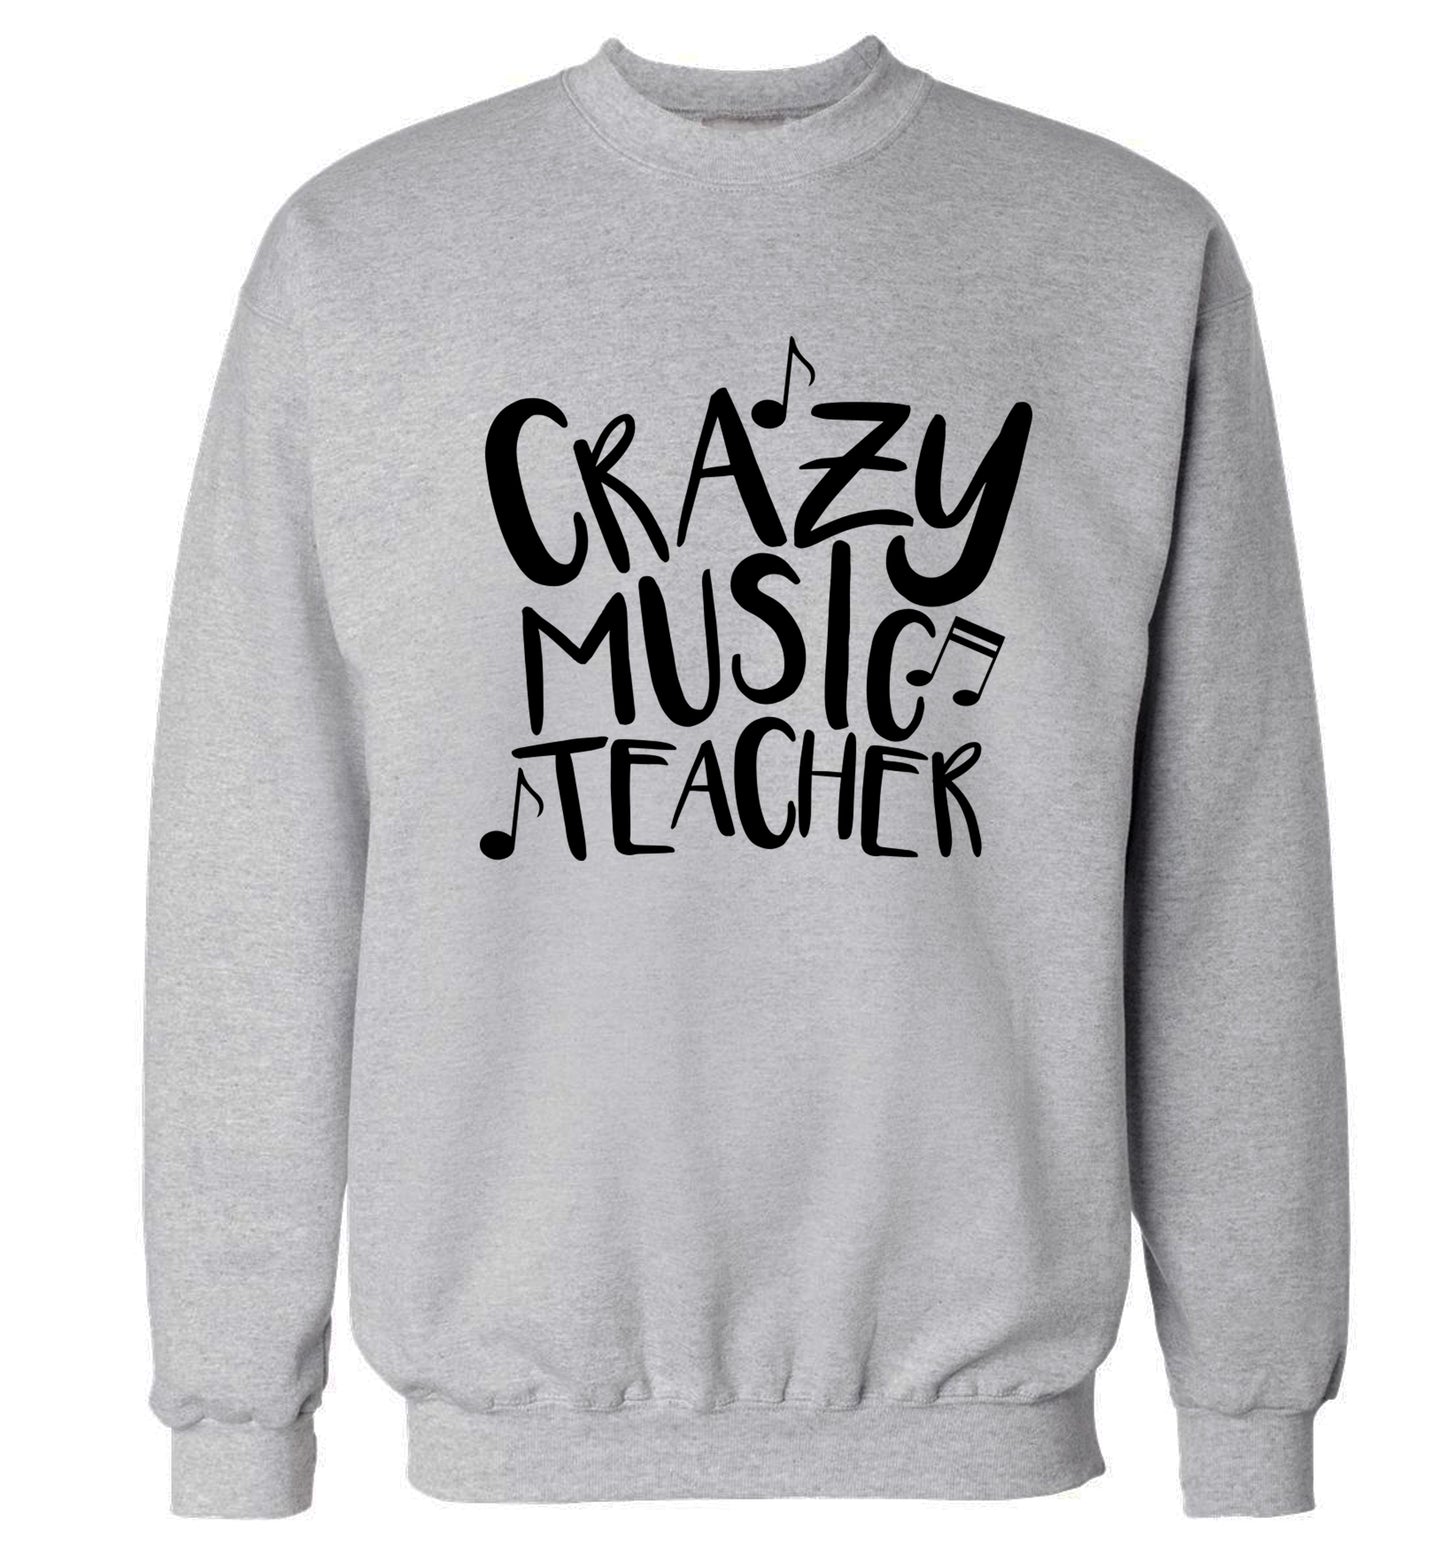 Crazy music teacher Adult's unisex grey Sweater 2XL